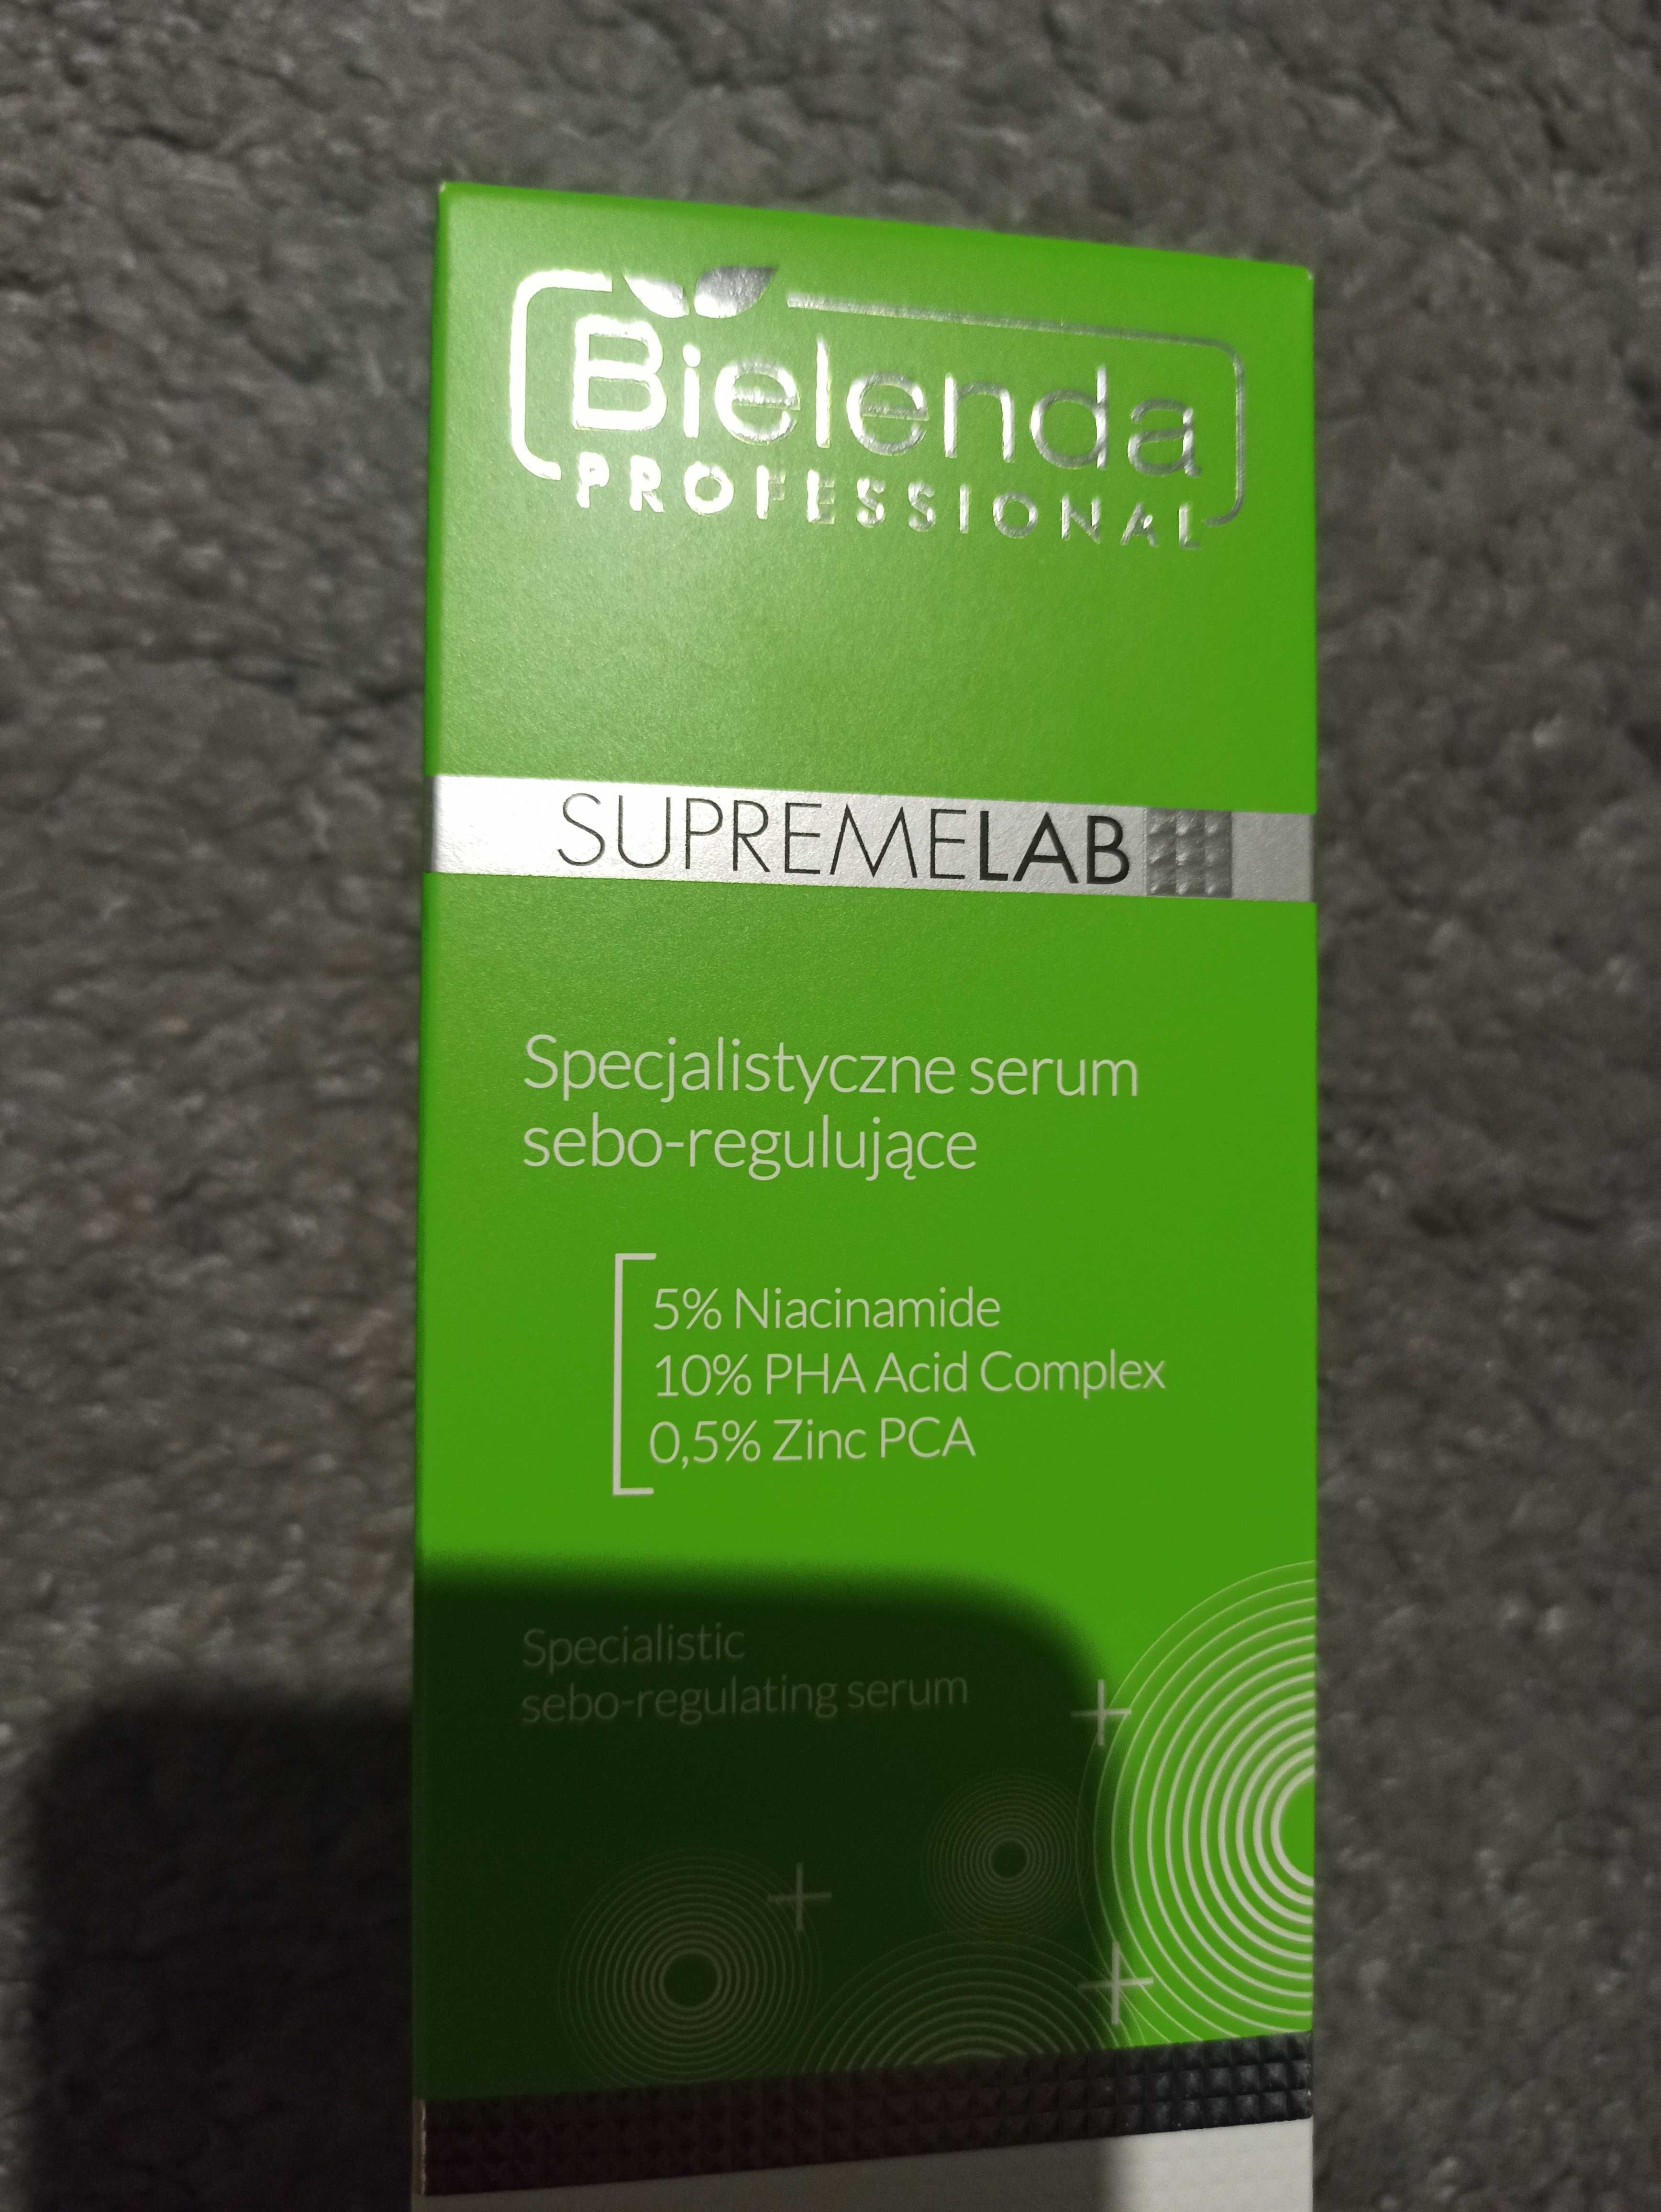 Nowe serum sebo regulujące Bielenda Professional supremelab